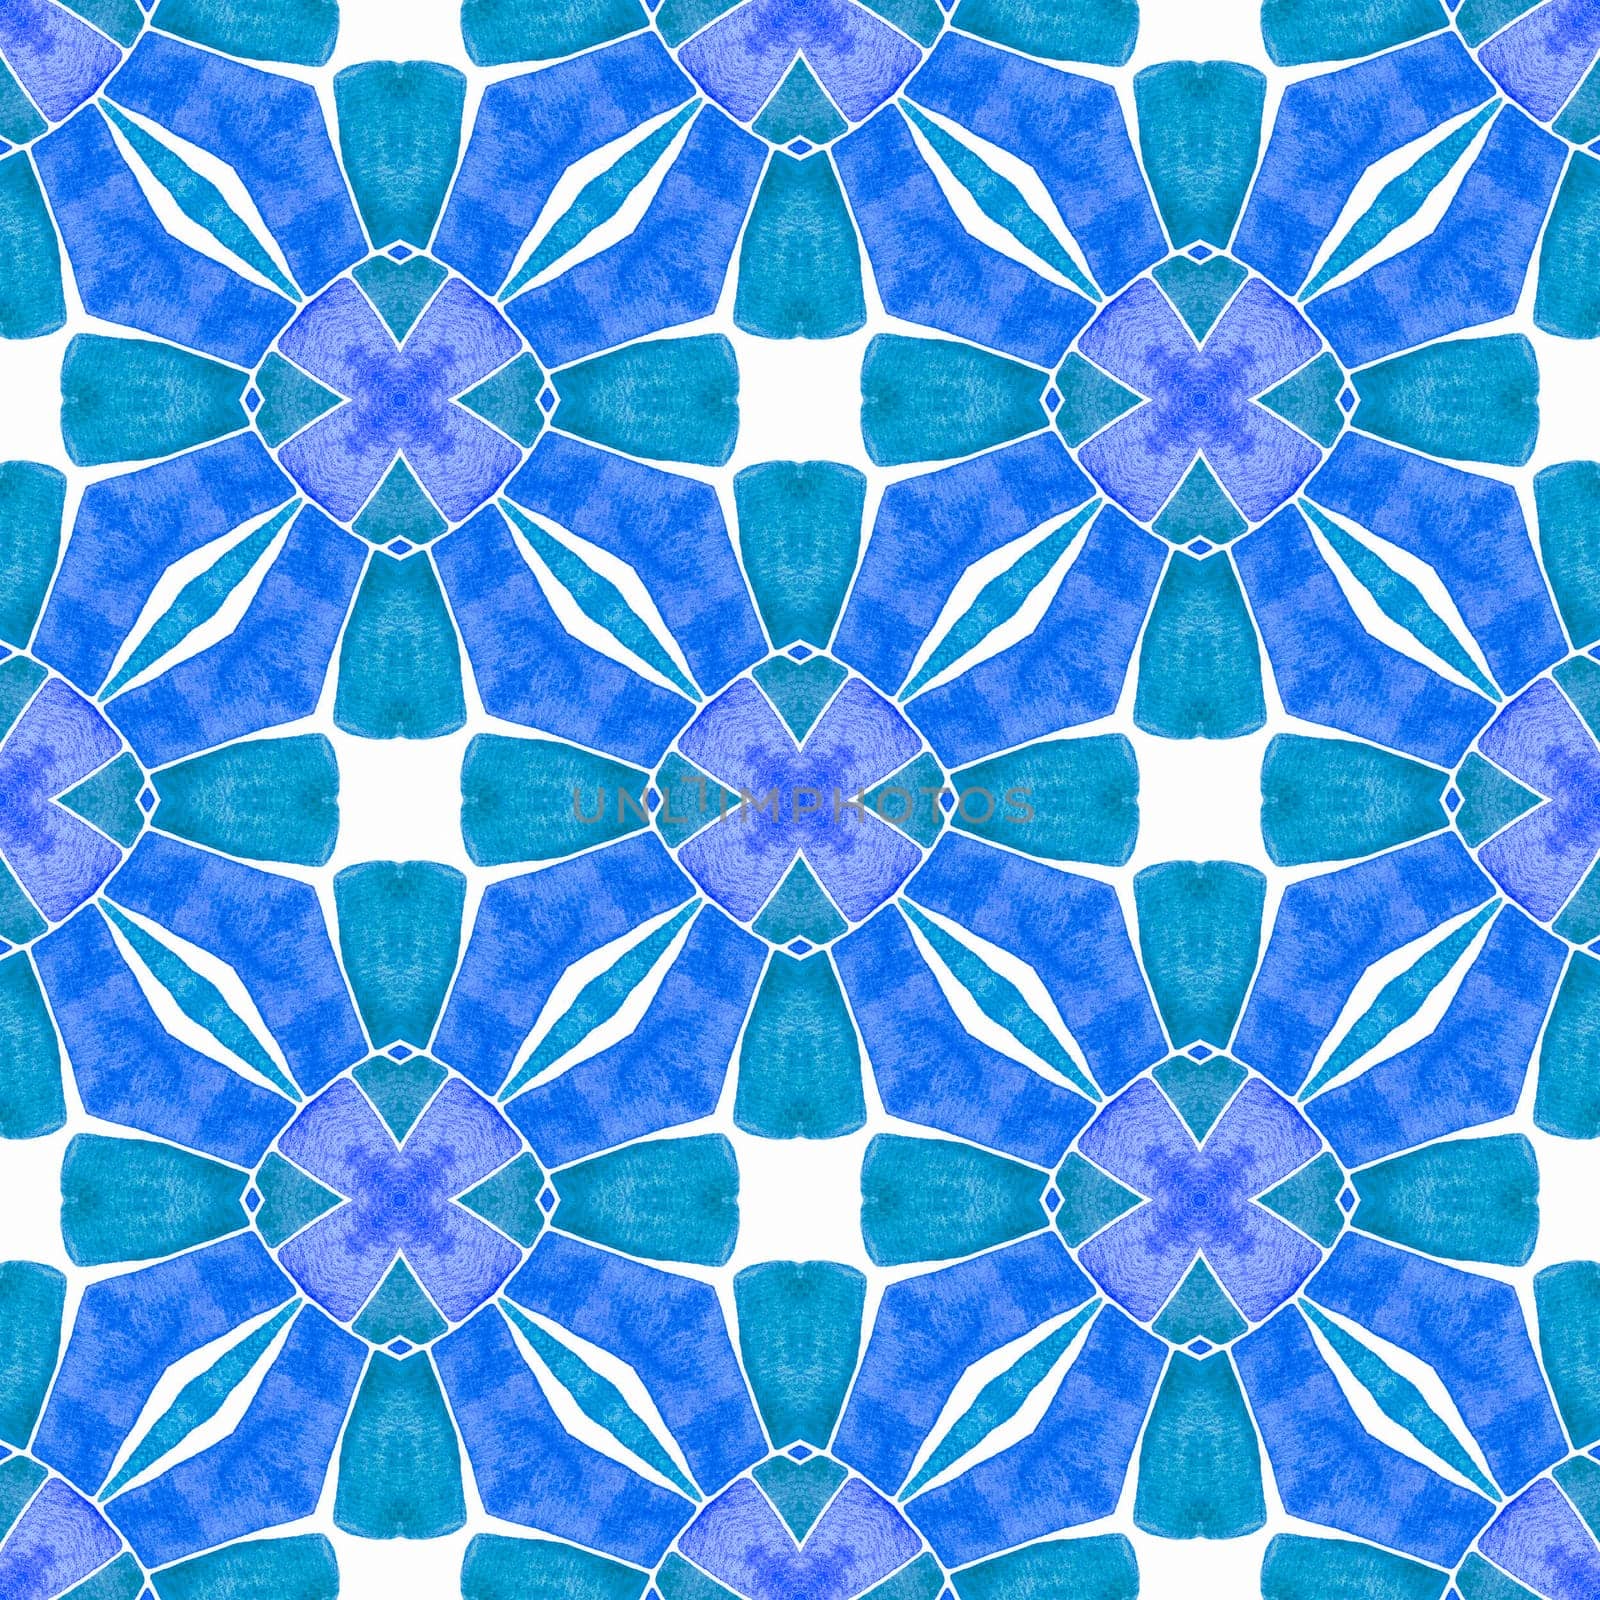 Mosaic seamless pattern. Blue terrific boho chic by beginagain